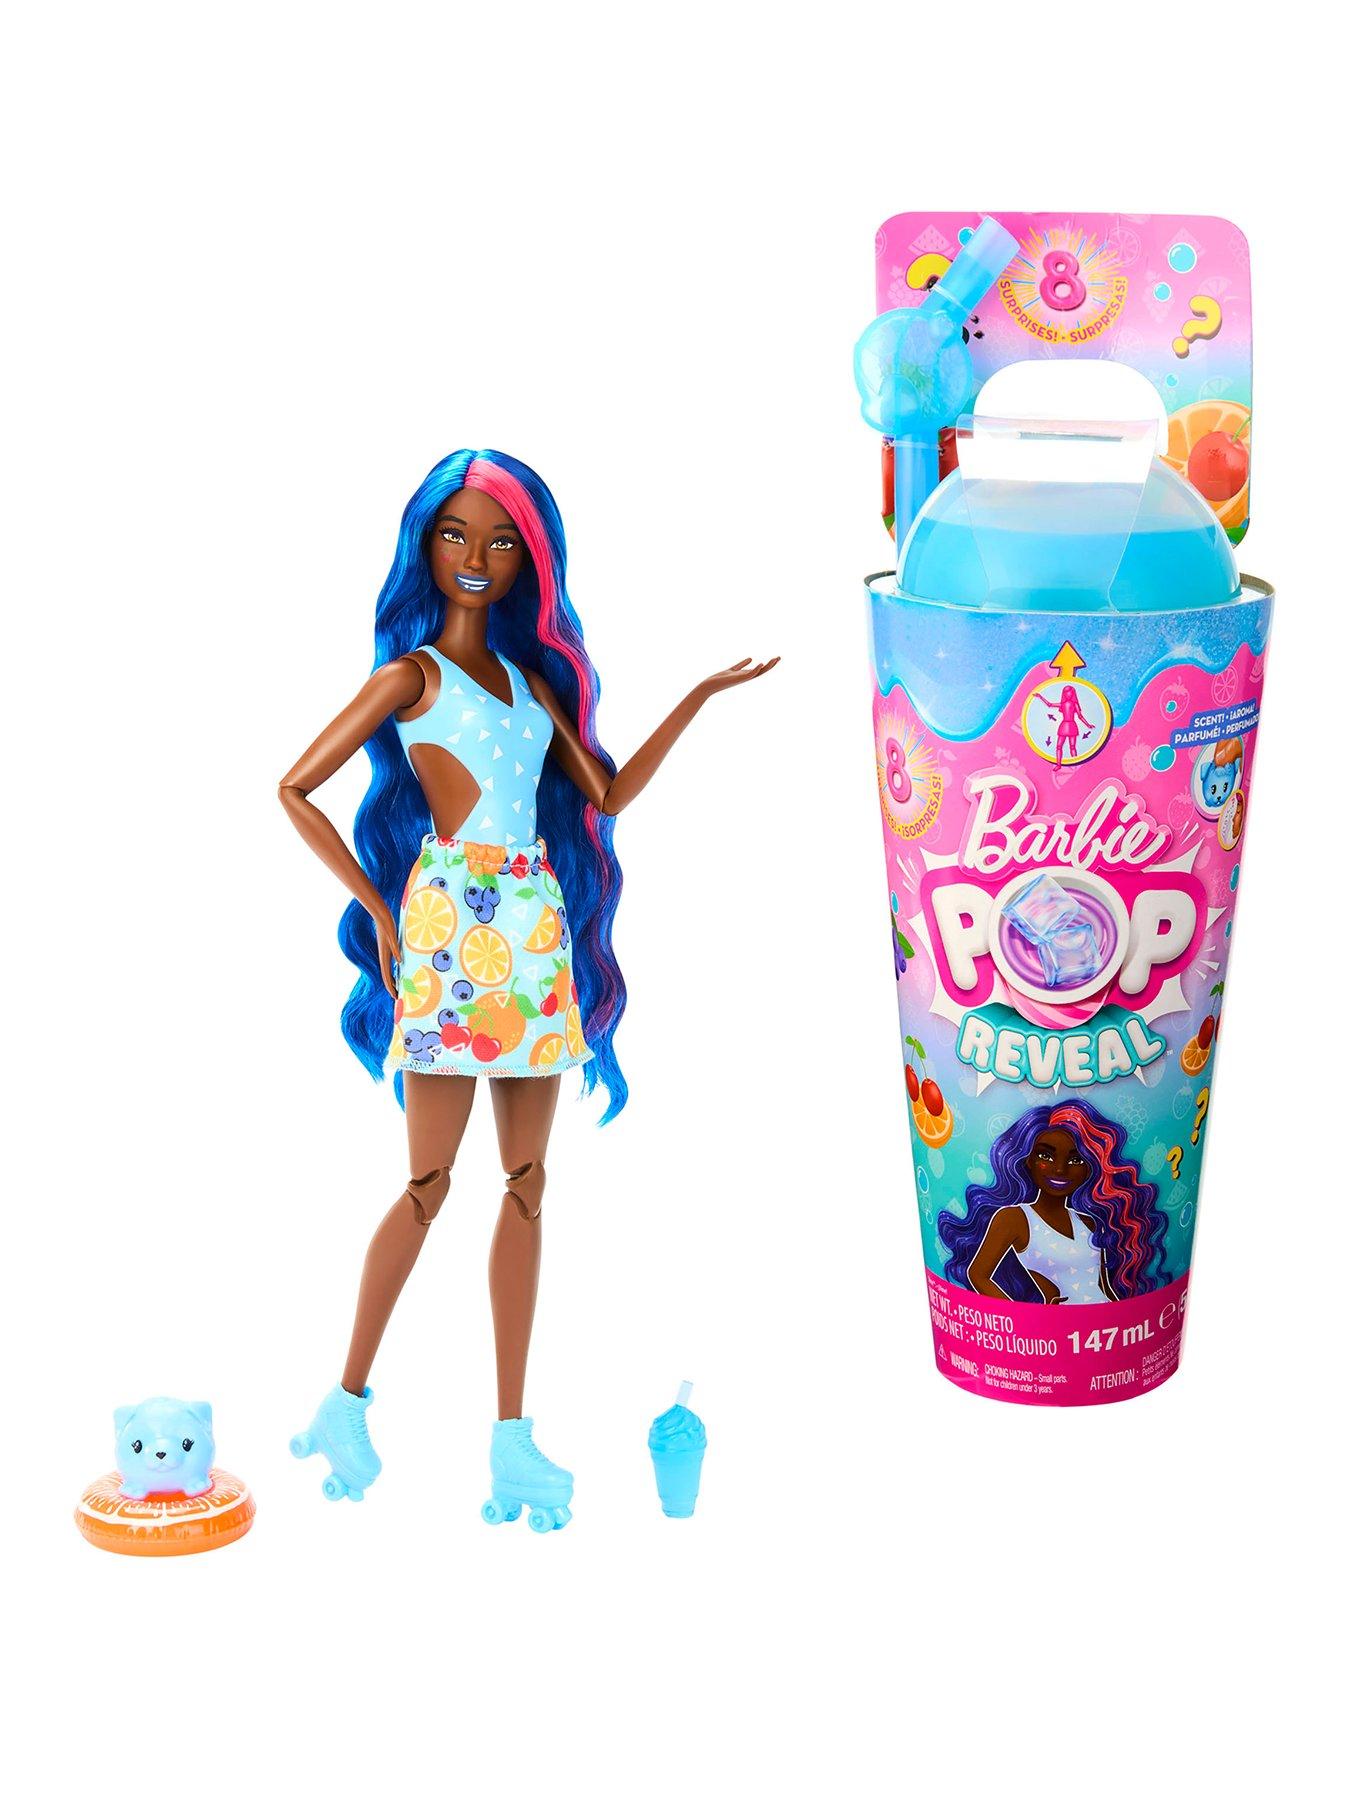 Barbie Pop Reveal Fruit Series - Strawberry Lemonade Scented Doll